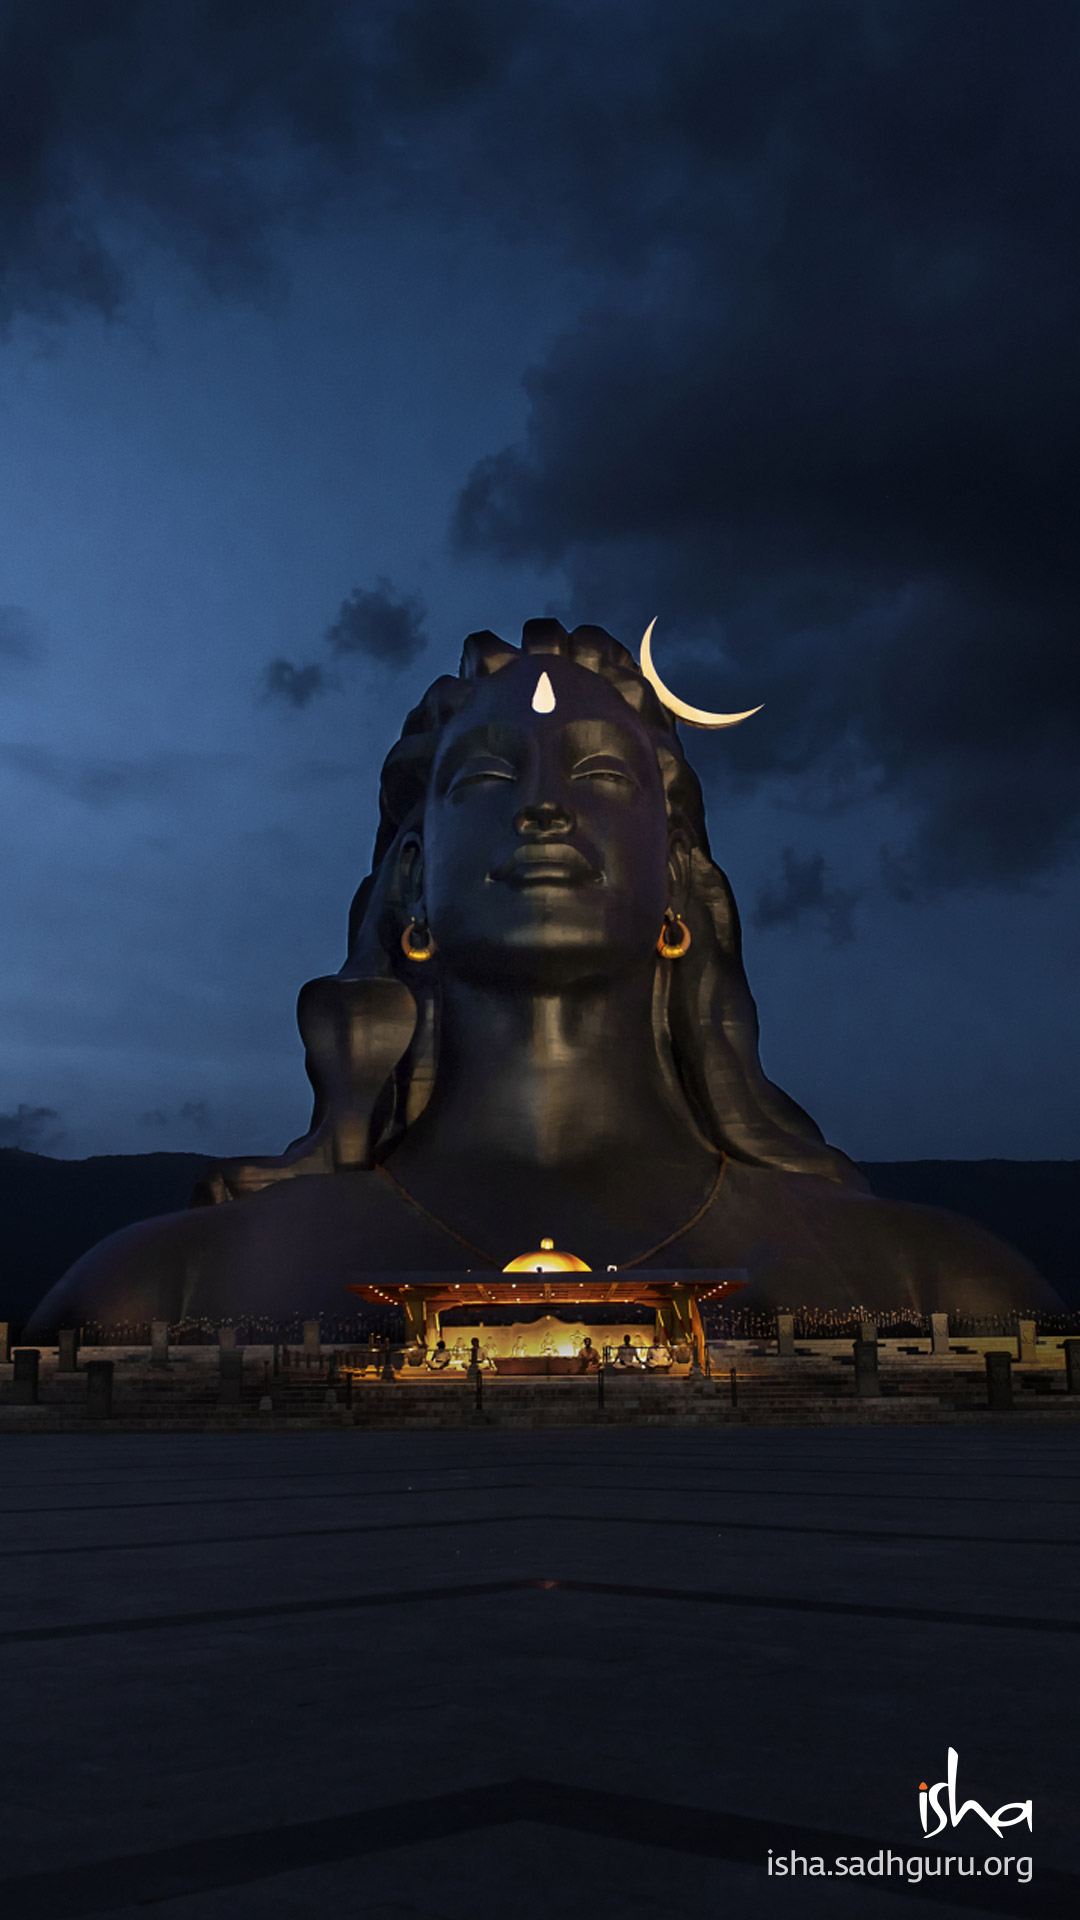 60+ Shiva(Adiyogi) Wallpapers HD - Free Download for ...